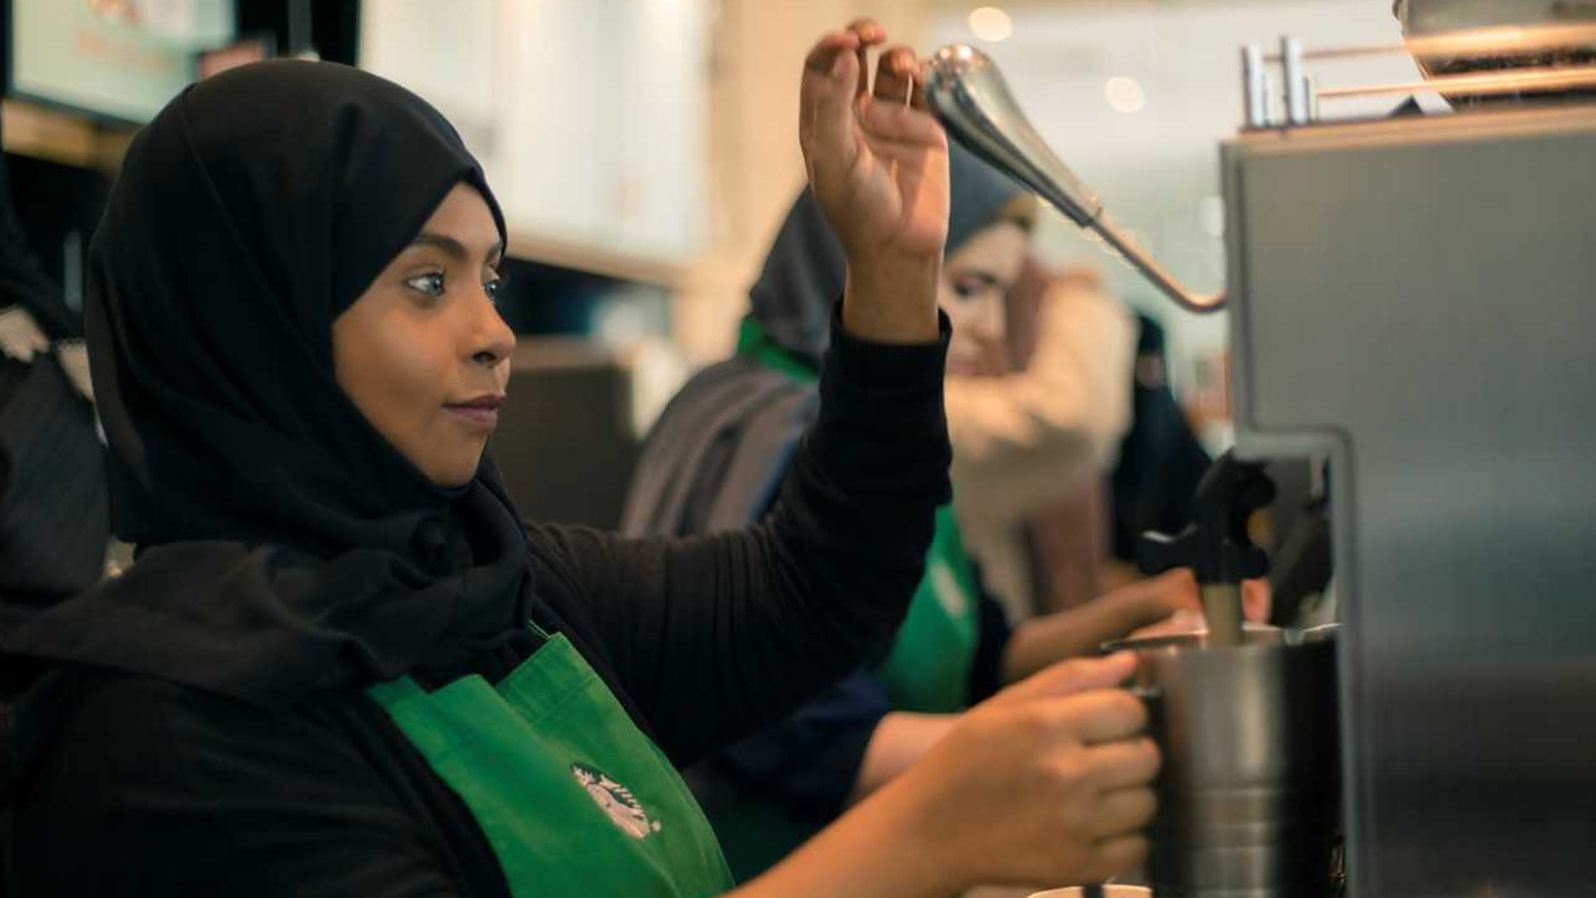 Manal Ghazwan manages a Starbucks branch located in Saudi capital Riyadh that serves both men and women.